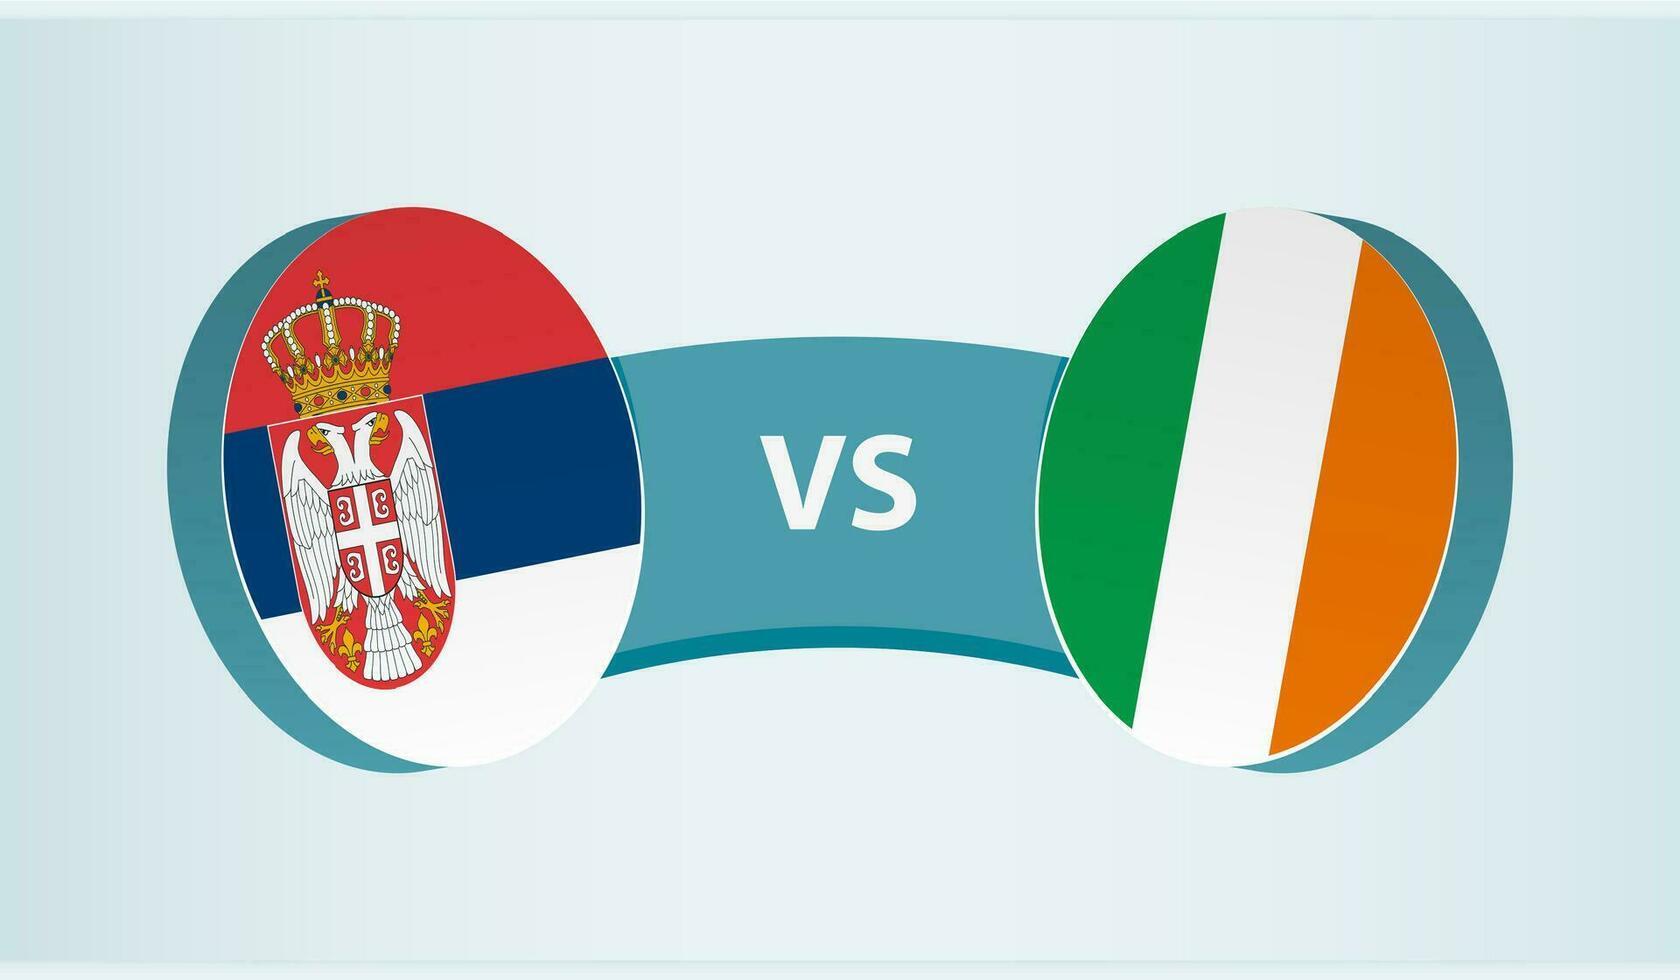 serbia mot Irland, team sporter konkurrens begrepp. vektor